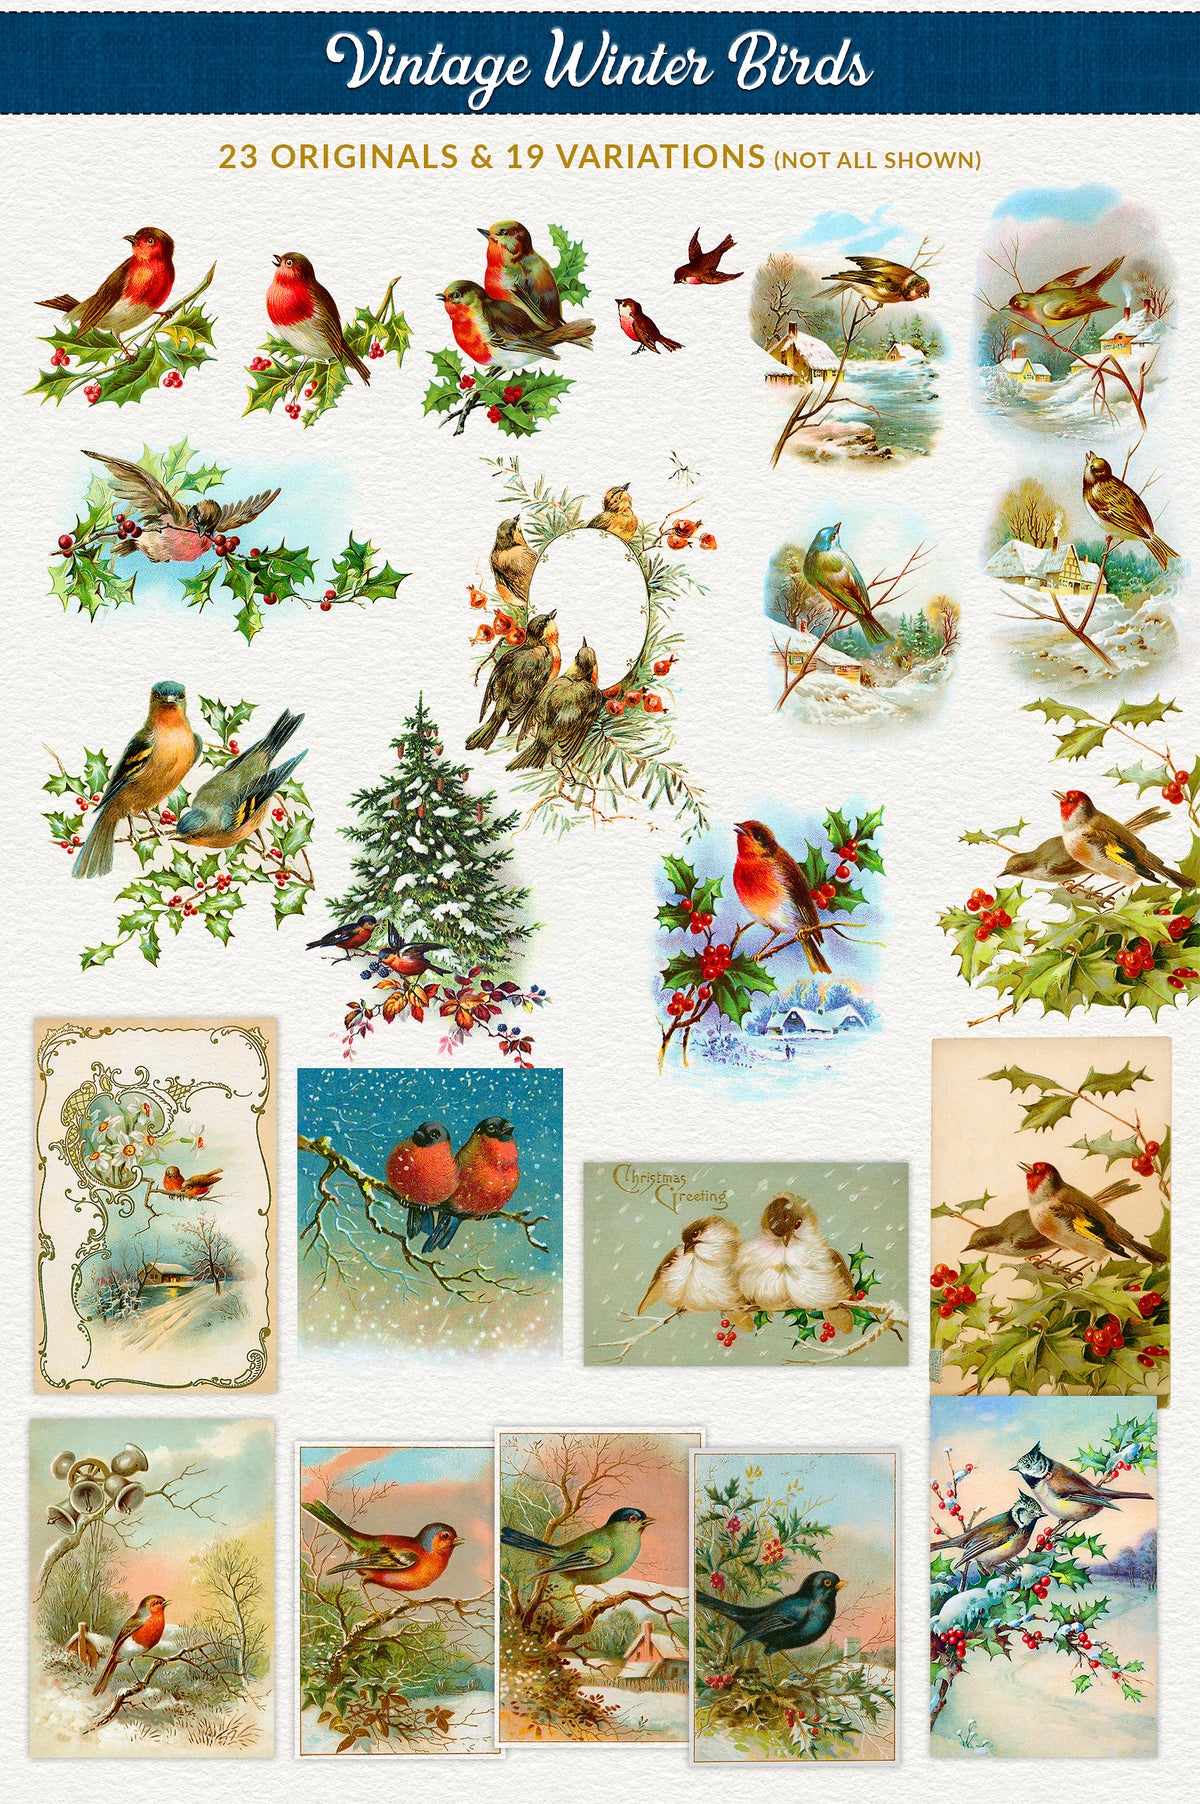 Vintage illustration graphics of Christmas winter bird illustrations.